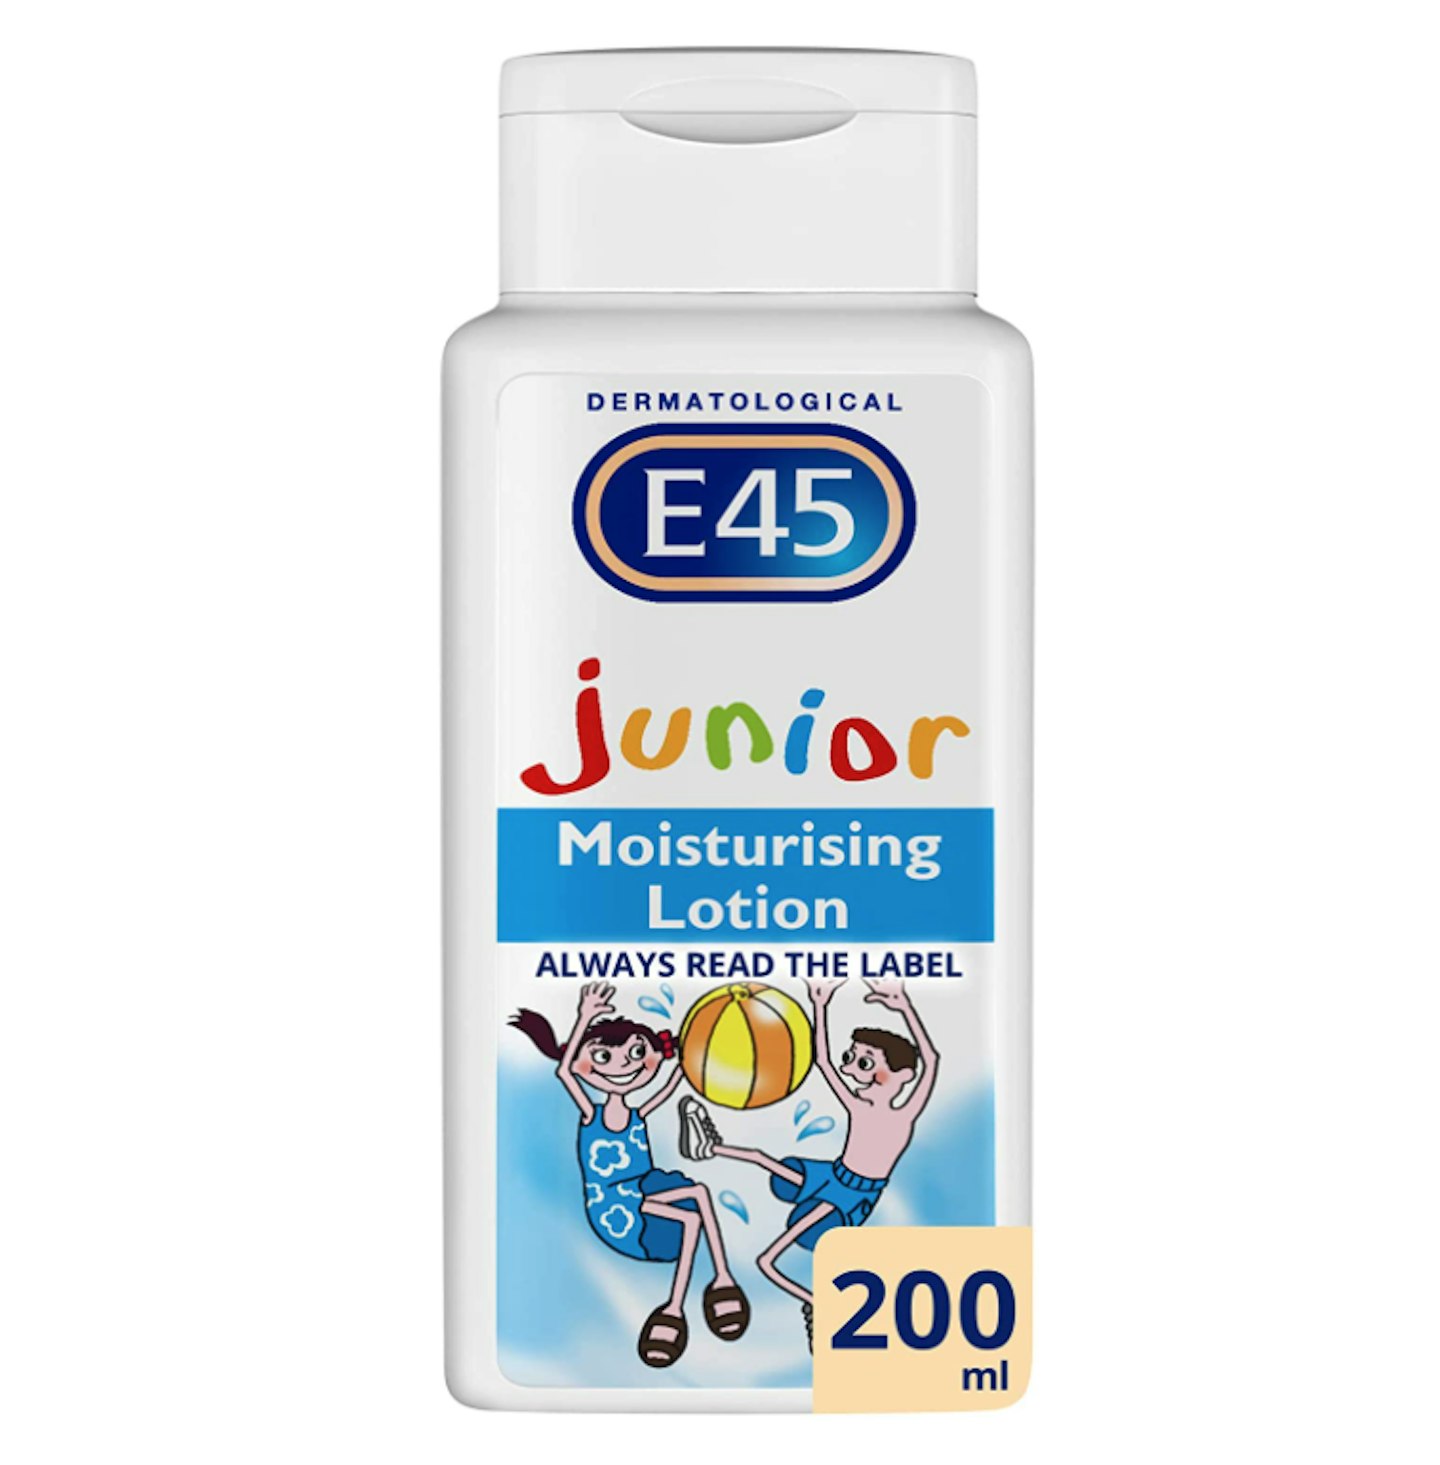 E45 Junior Children's Dermatological Moisturising Cream Lotion